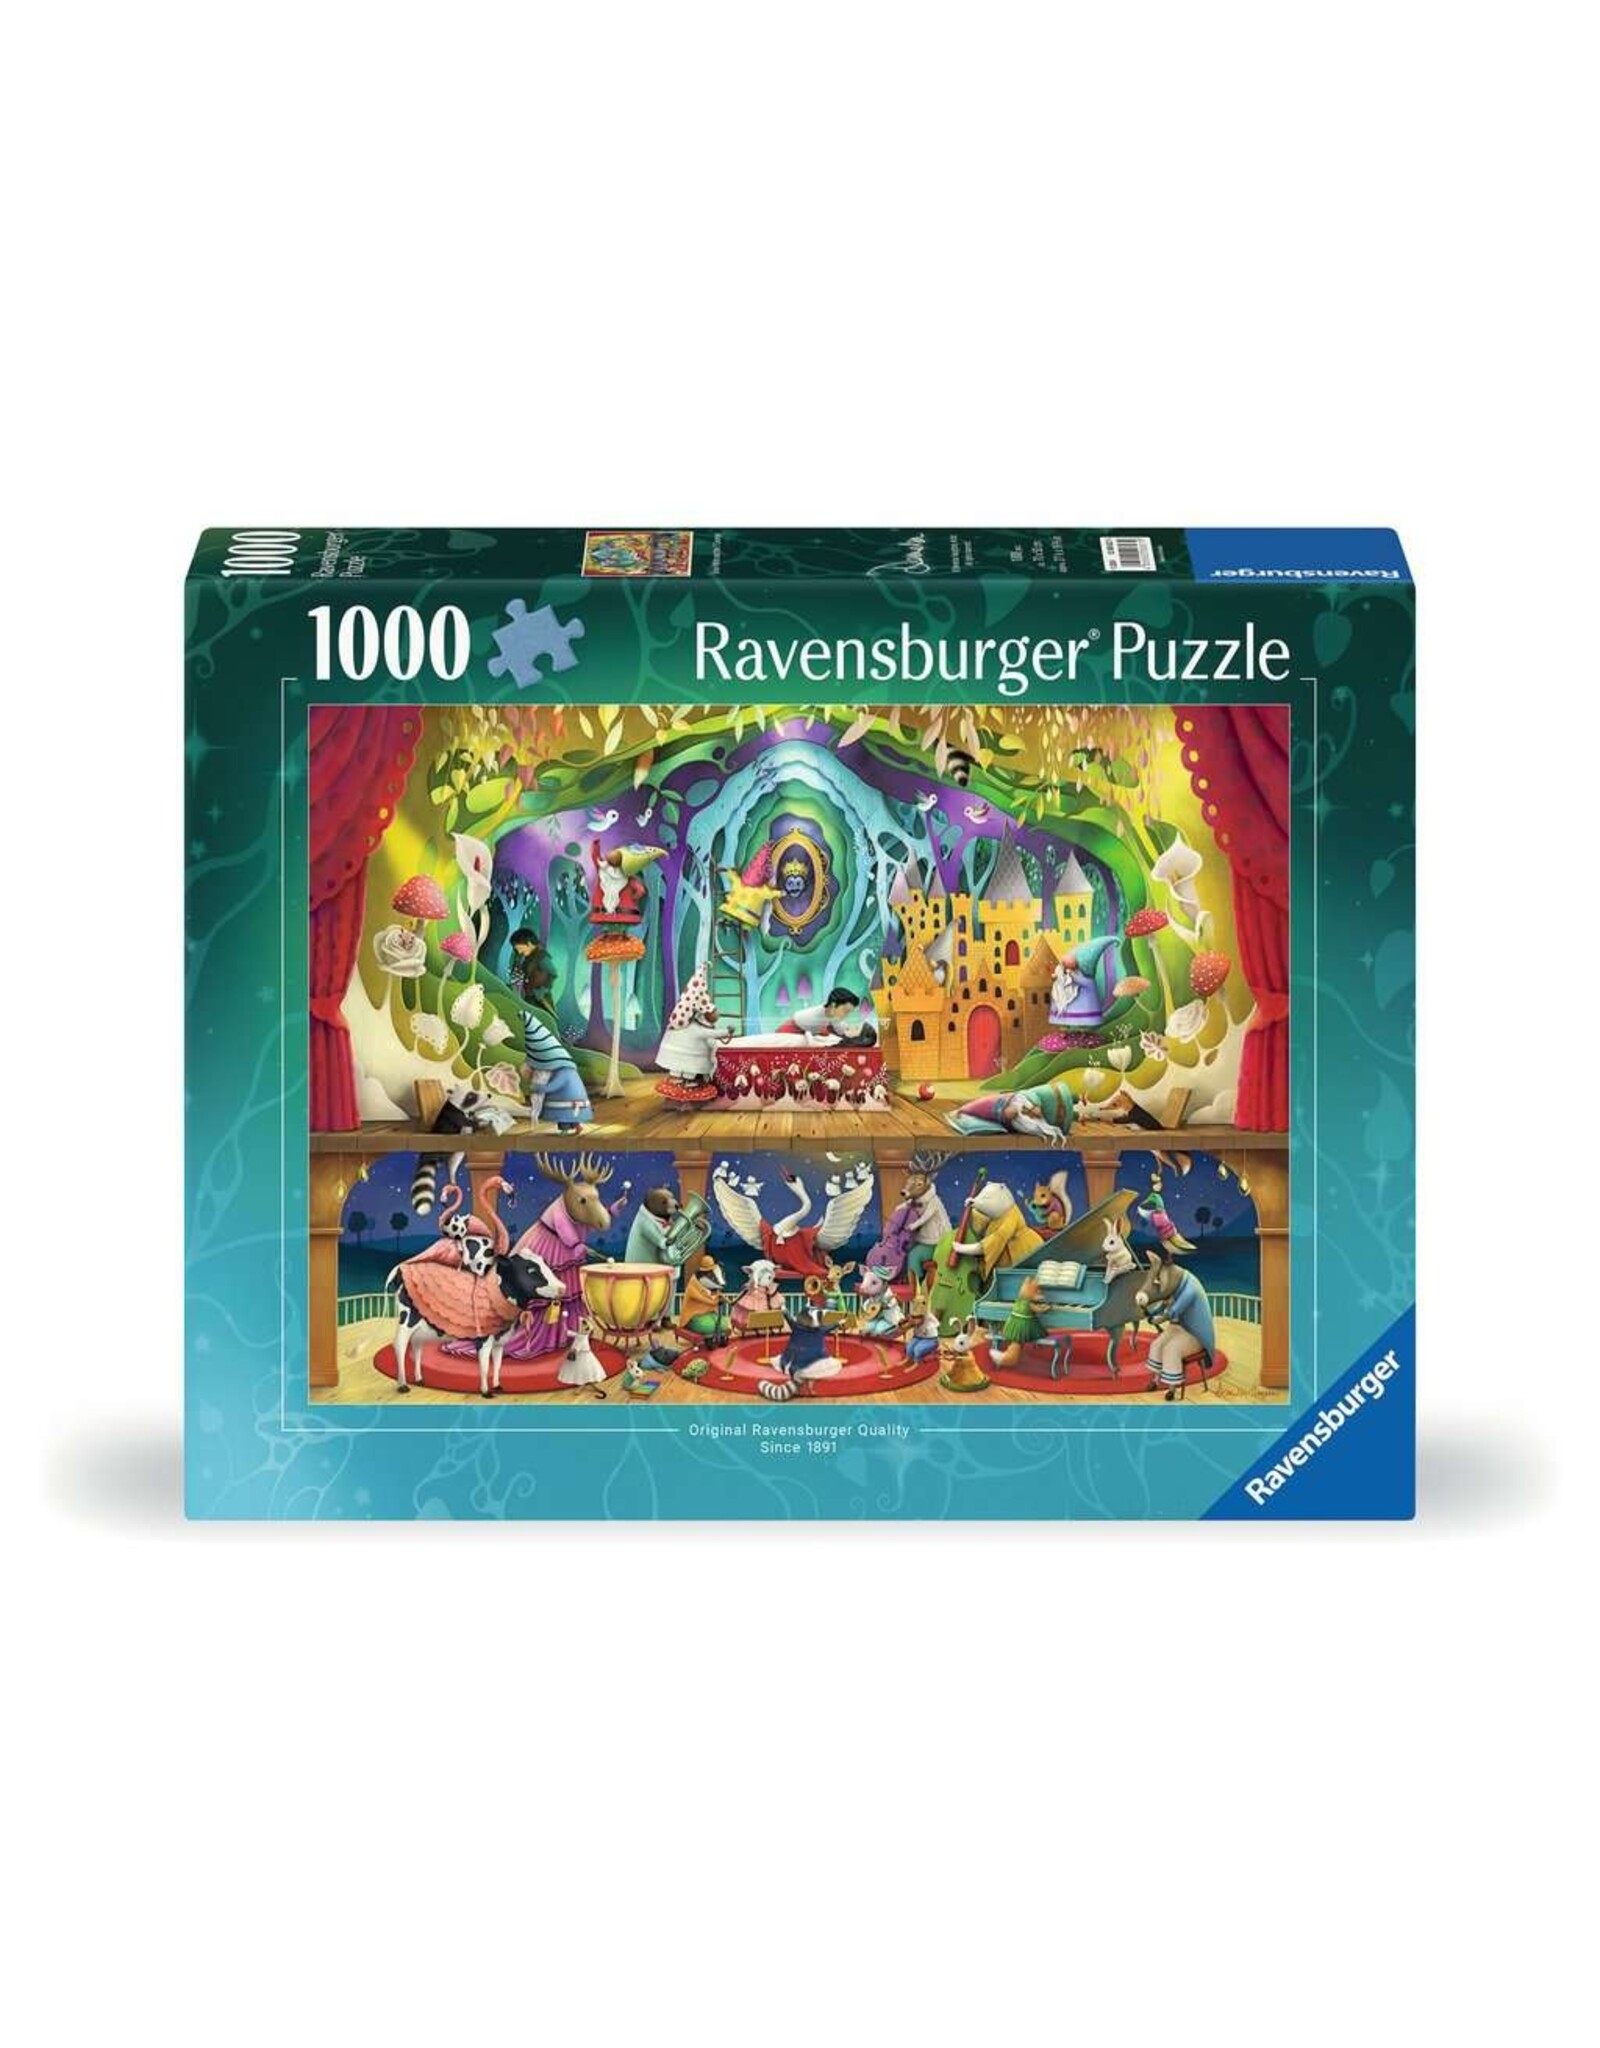 Ravensburger Snow White and the Seven Gnomes 1000 pcs